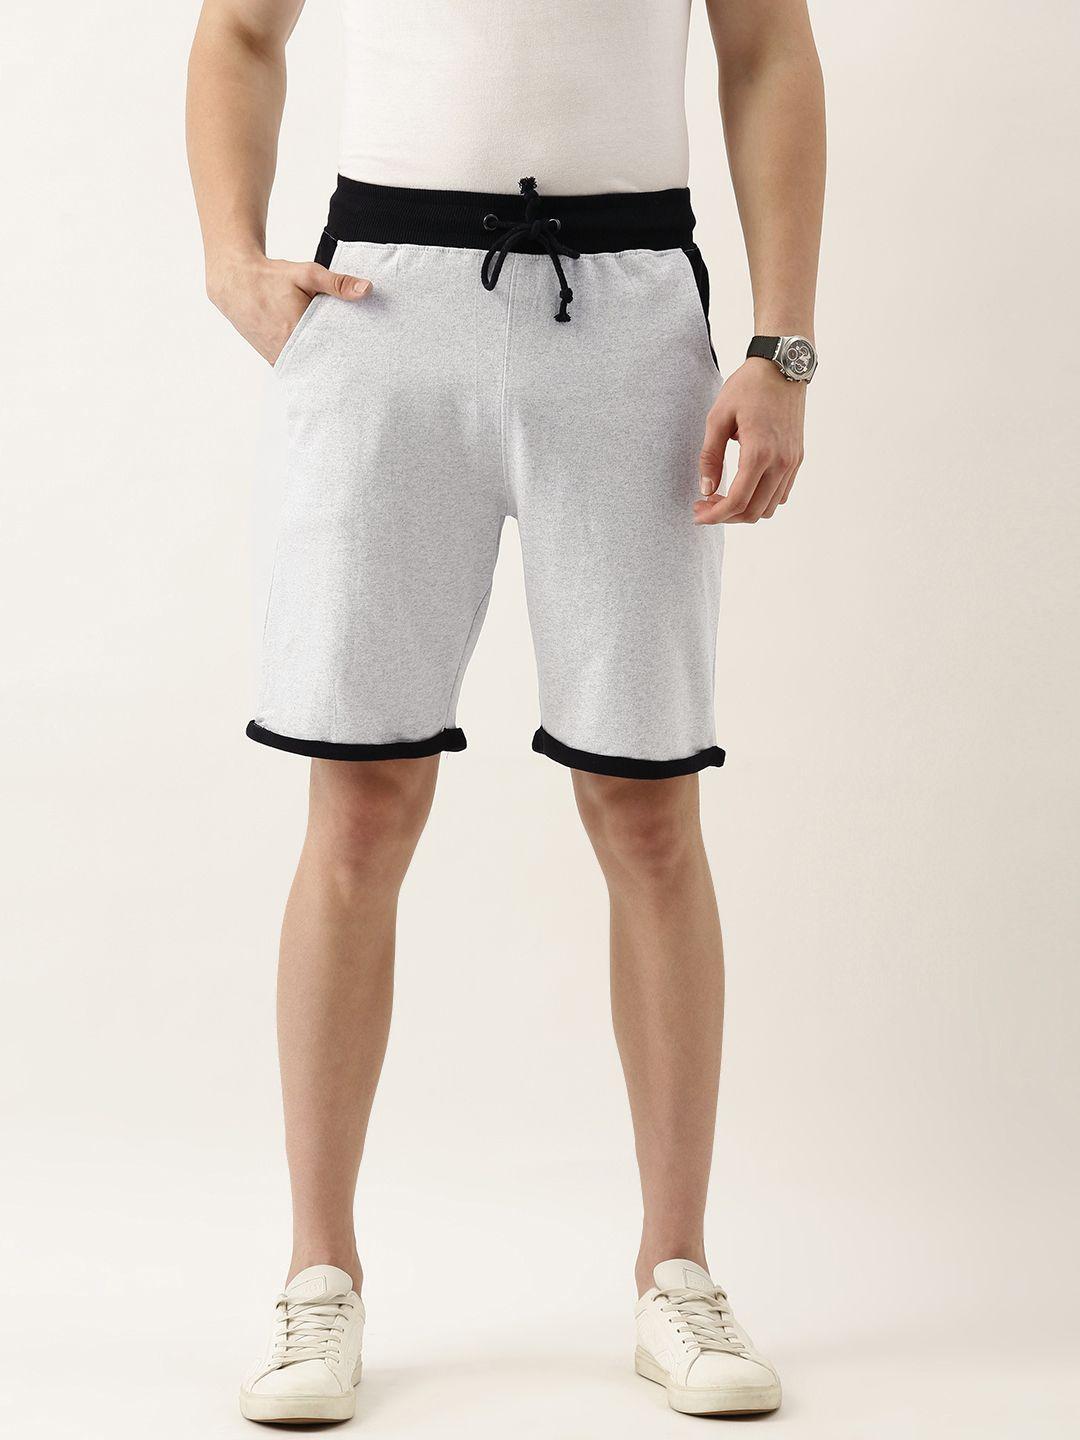 arise-men-white-solid-shorts